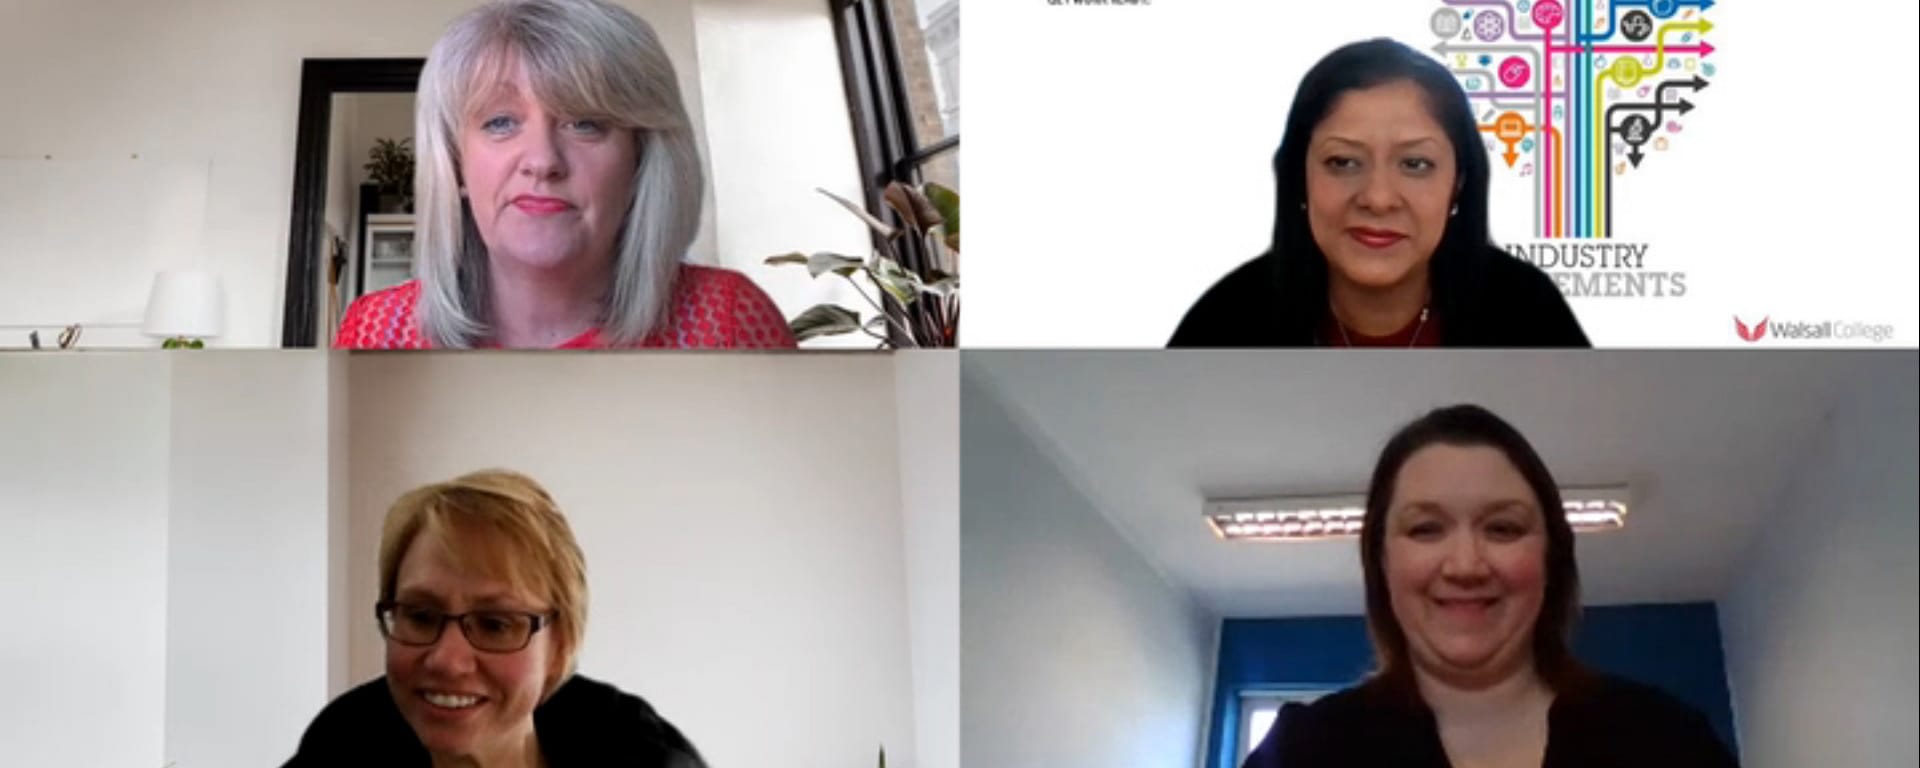 Teams screenshot of women in business talk facing